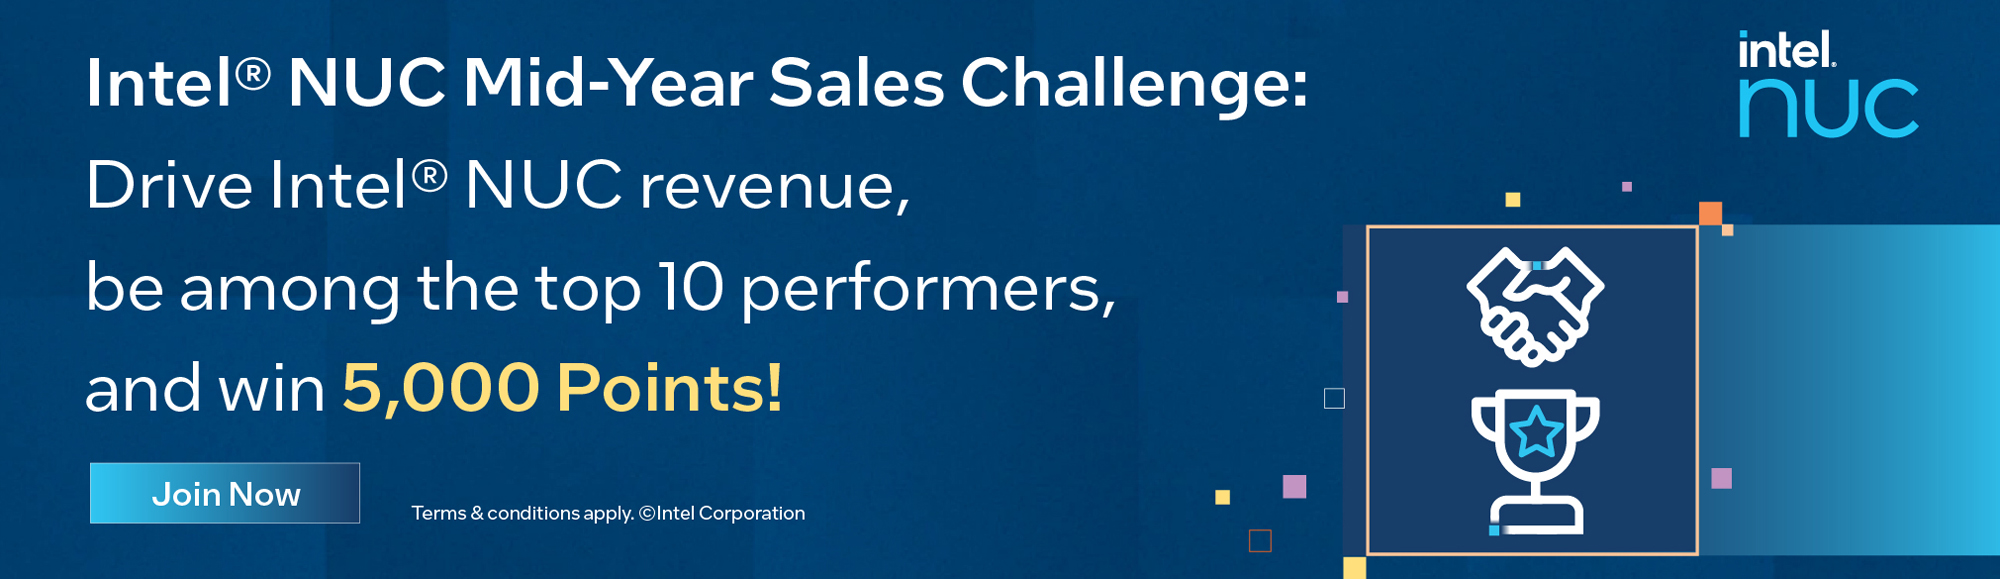 Intel NUC Mid-Year Sales Challenge